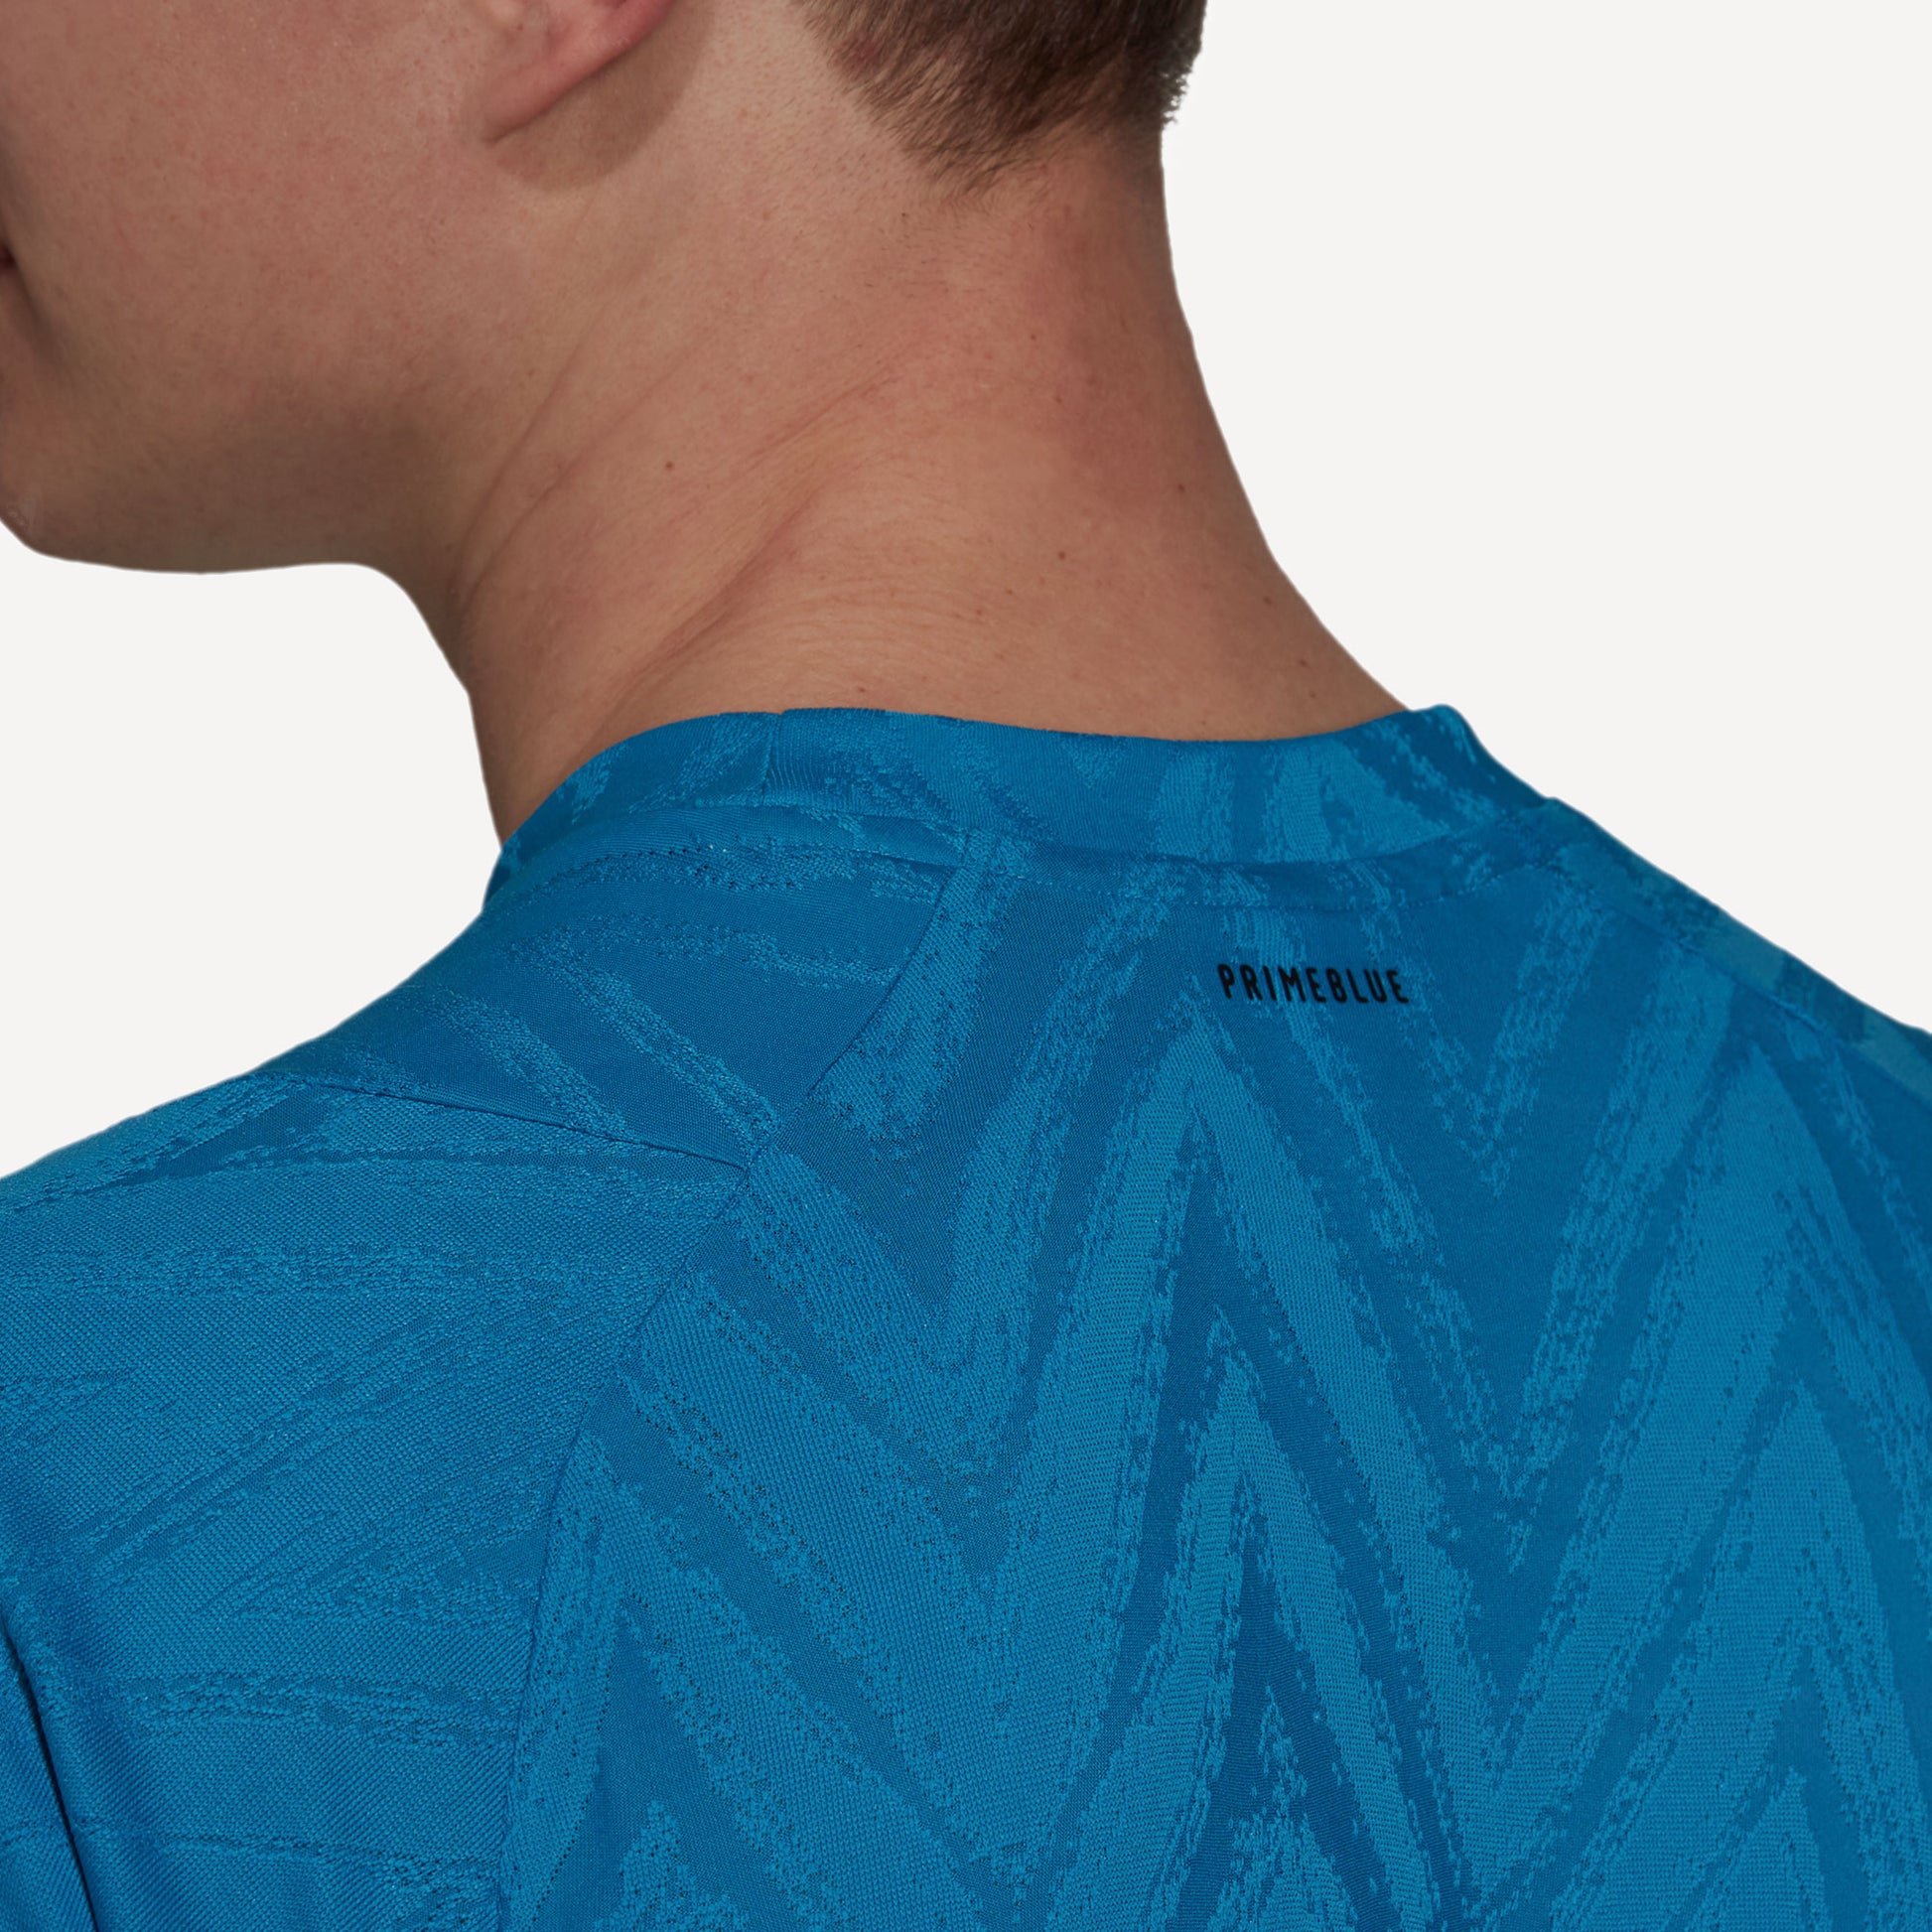 adidas Freelift Primeblue Men's Tennis Shirt Blue (5)